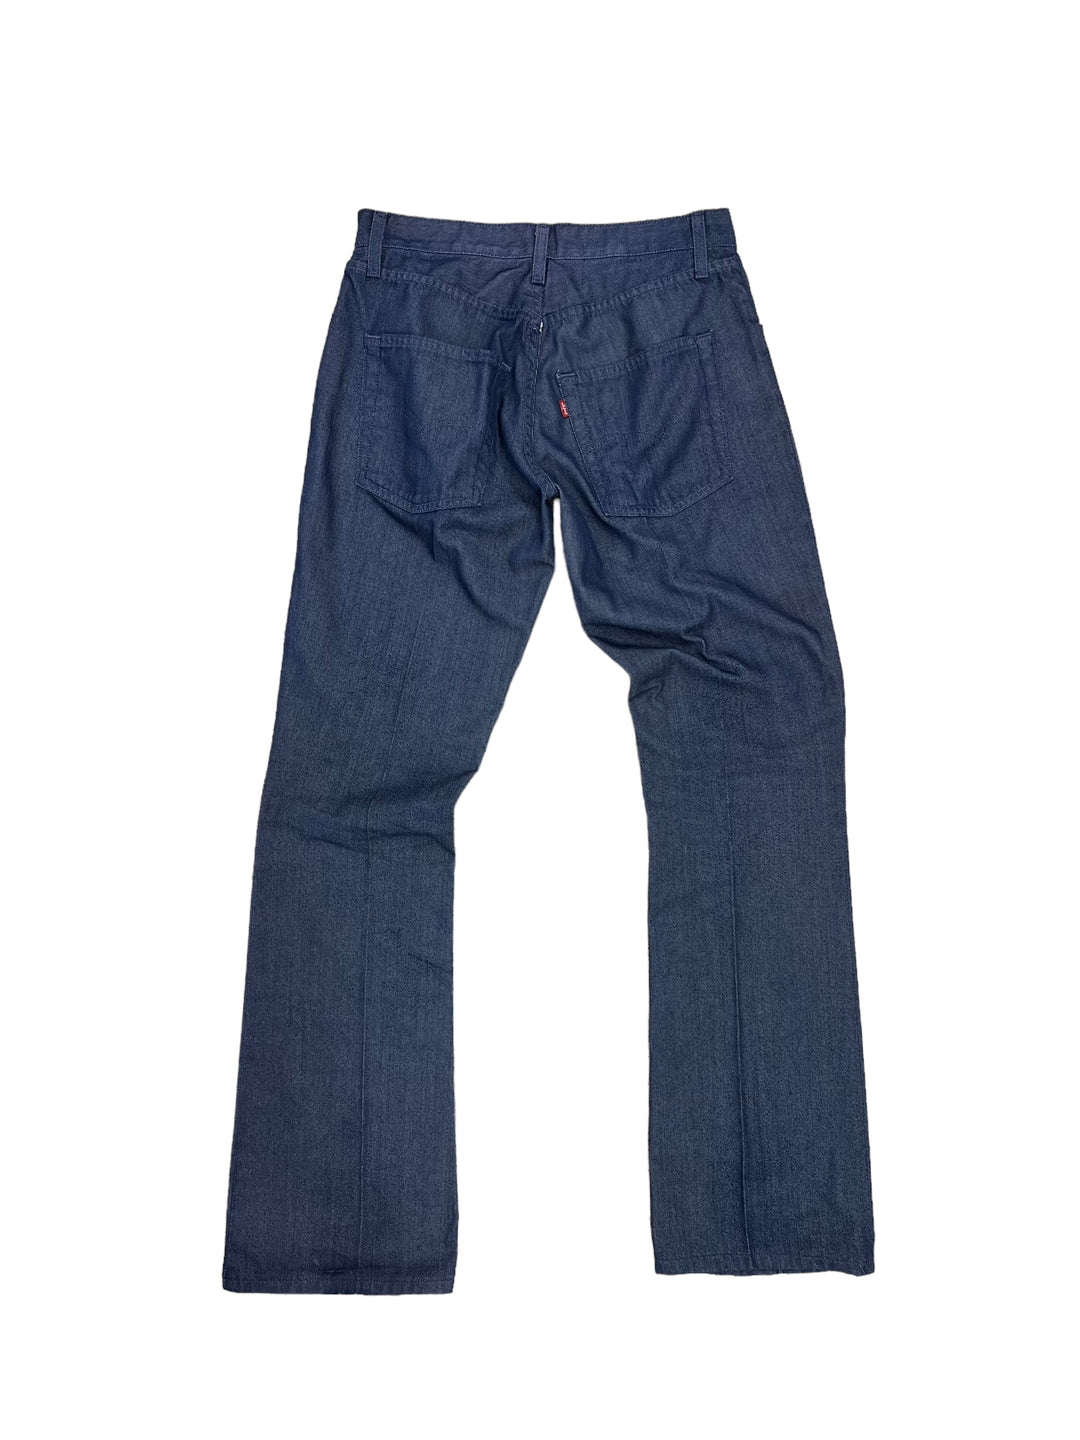 Levi’s Vintage Straight Jeans Women’s Medium (38)